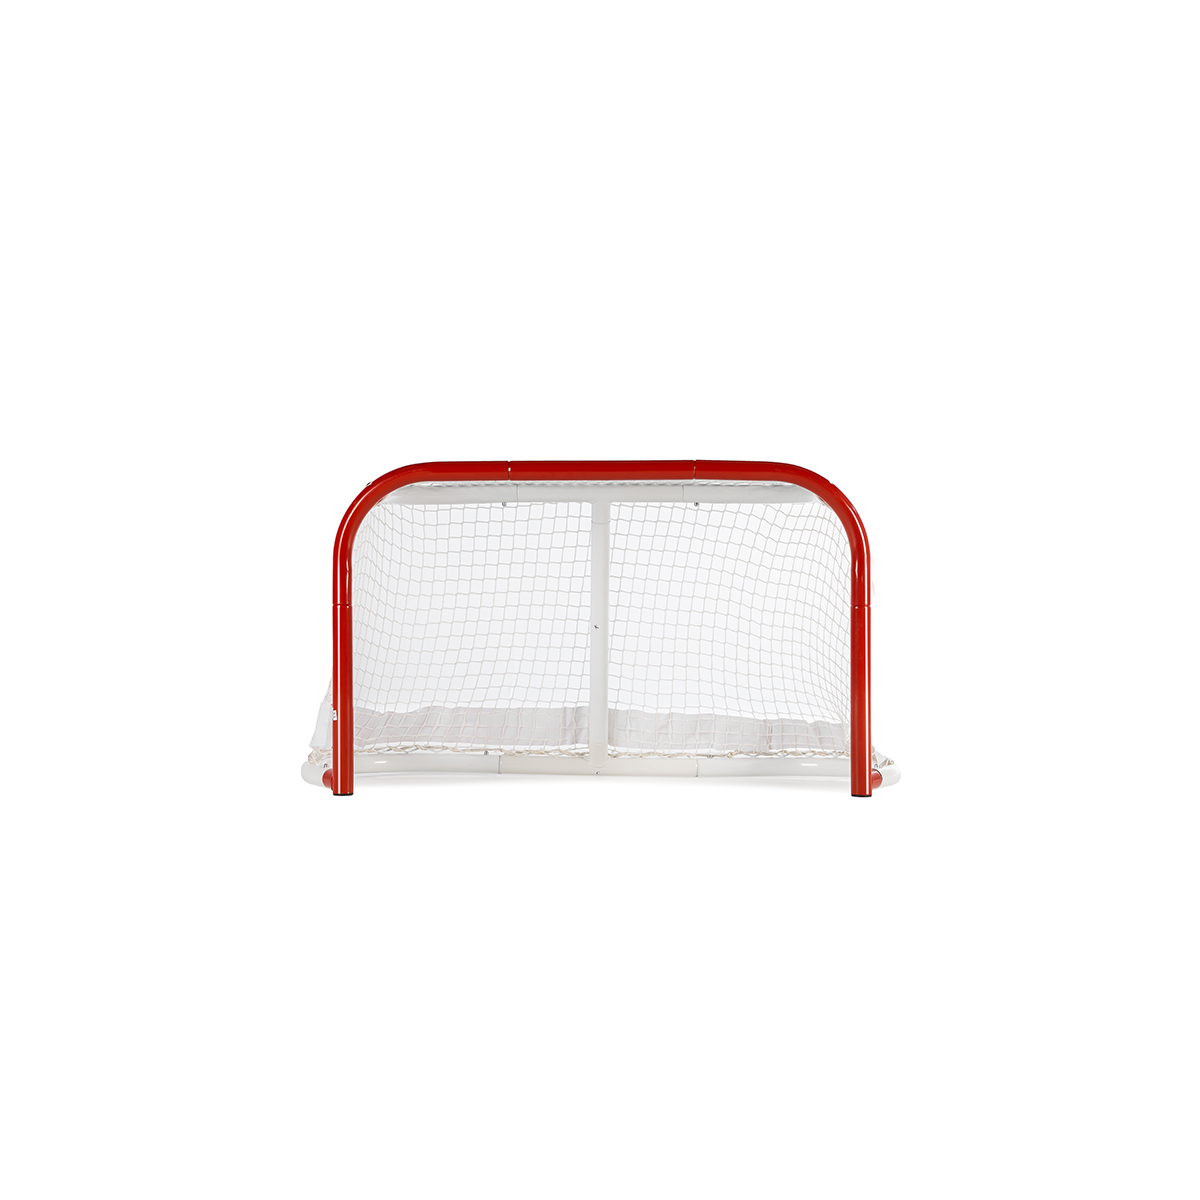 Ворота хоккейные Mad Guy с сеткой 0,81 х 0,51 x 0,38 м 